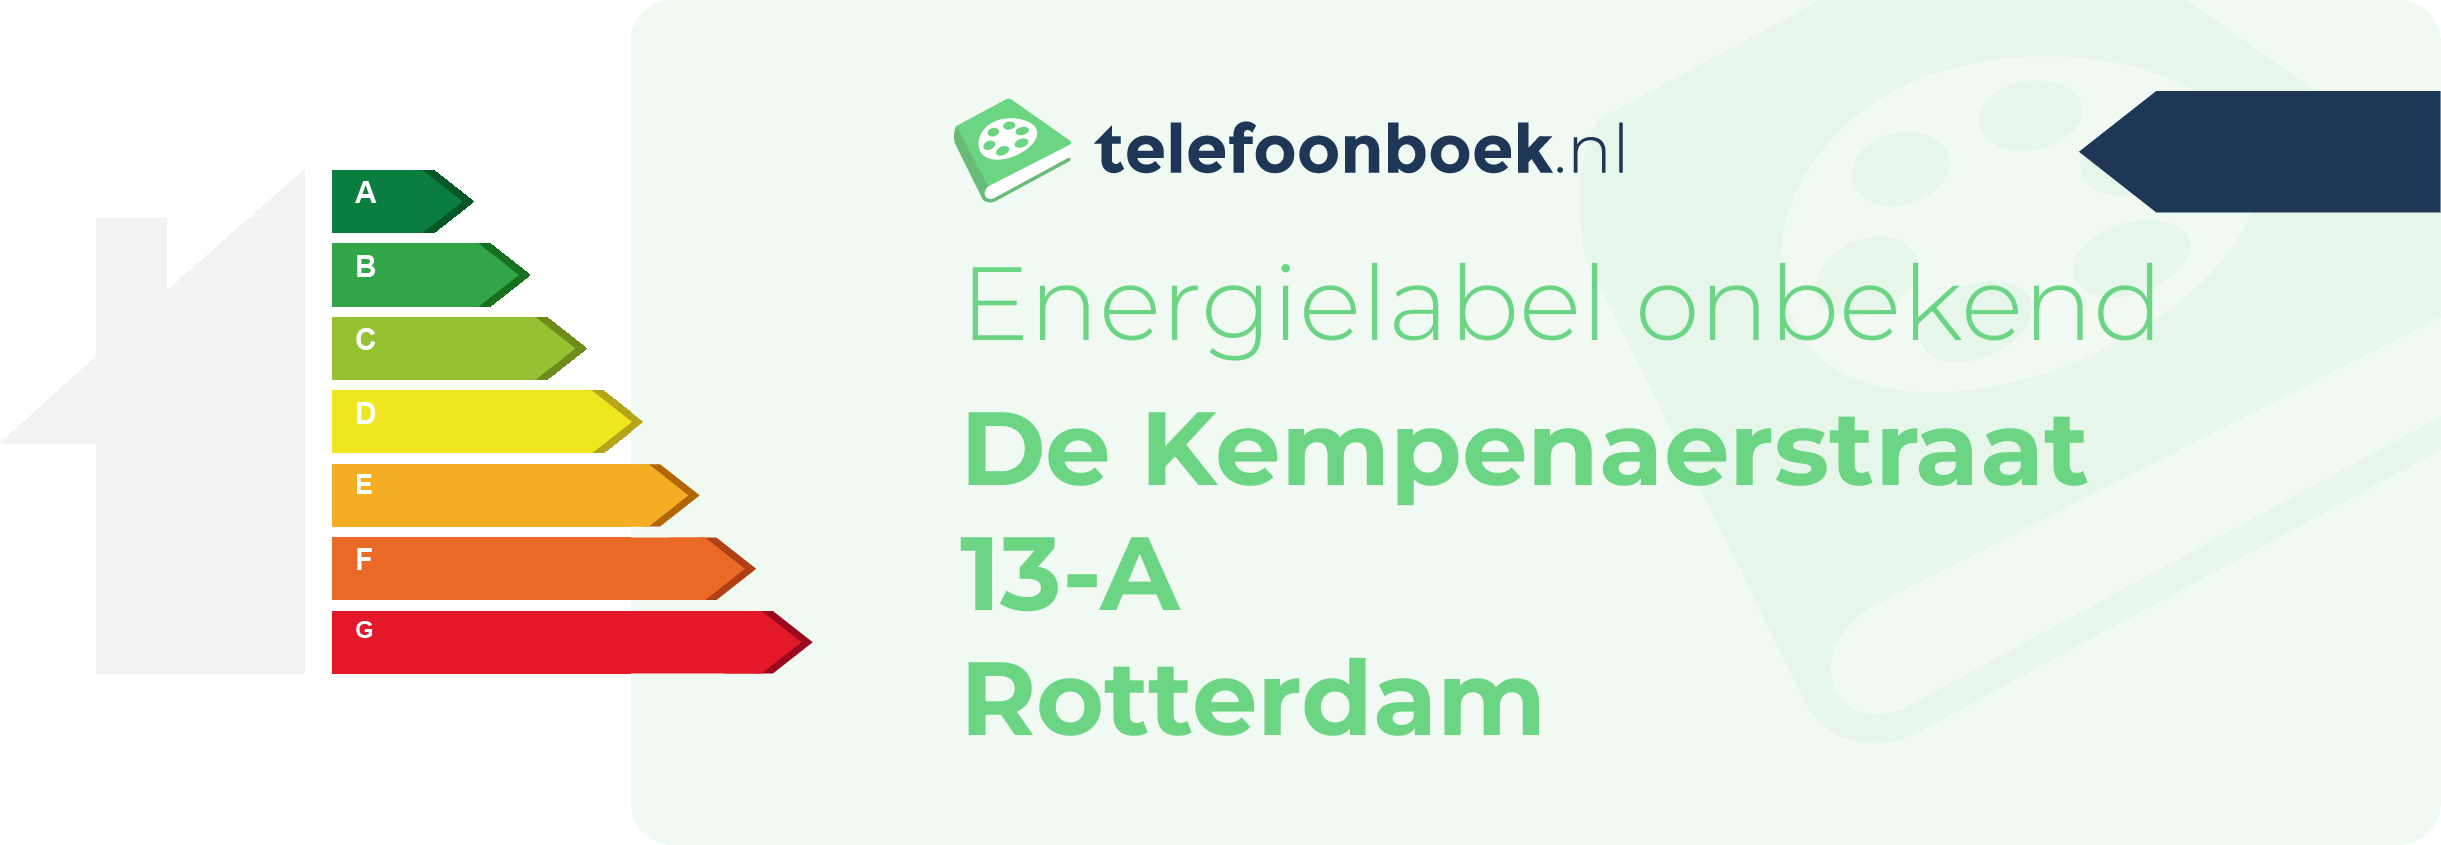 Energielabel De Kempenaerstraat 13-A Rotterdam